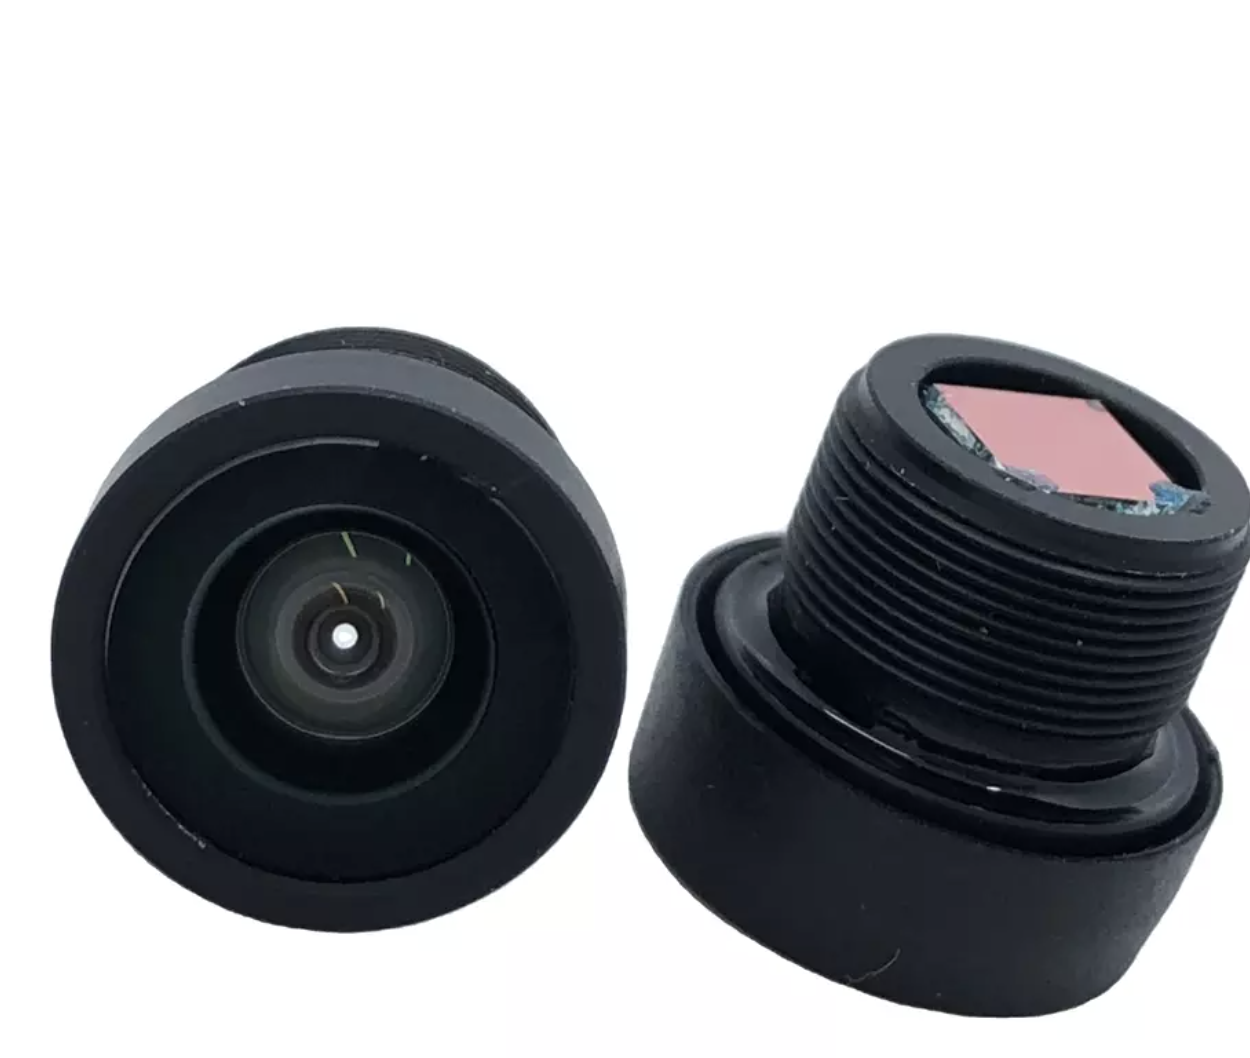 Cheap price 8 Layer Pcb - Wholesale M12 Wide angle 4MP 1/2.7 inch OV2710 OV4689 sensor 4mp CMOS m12 cctv DVR camera lens – Ronghua